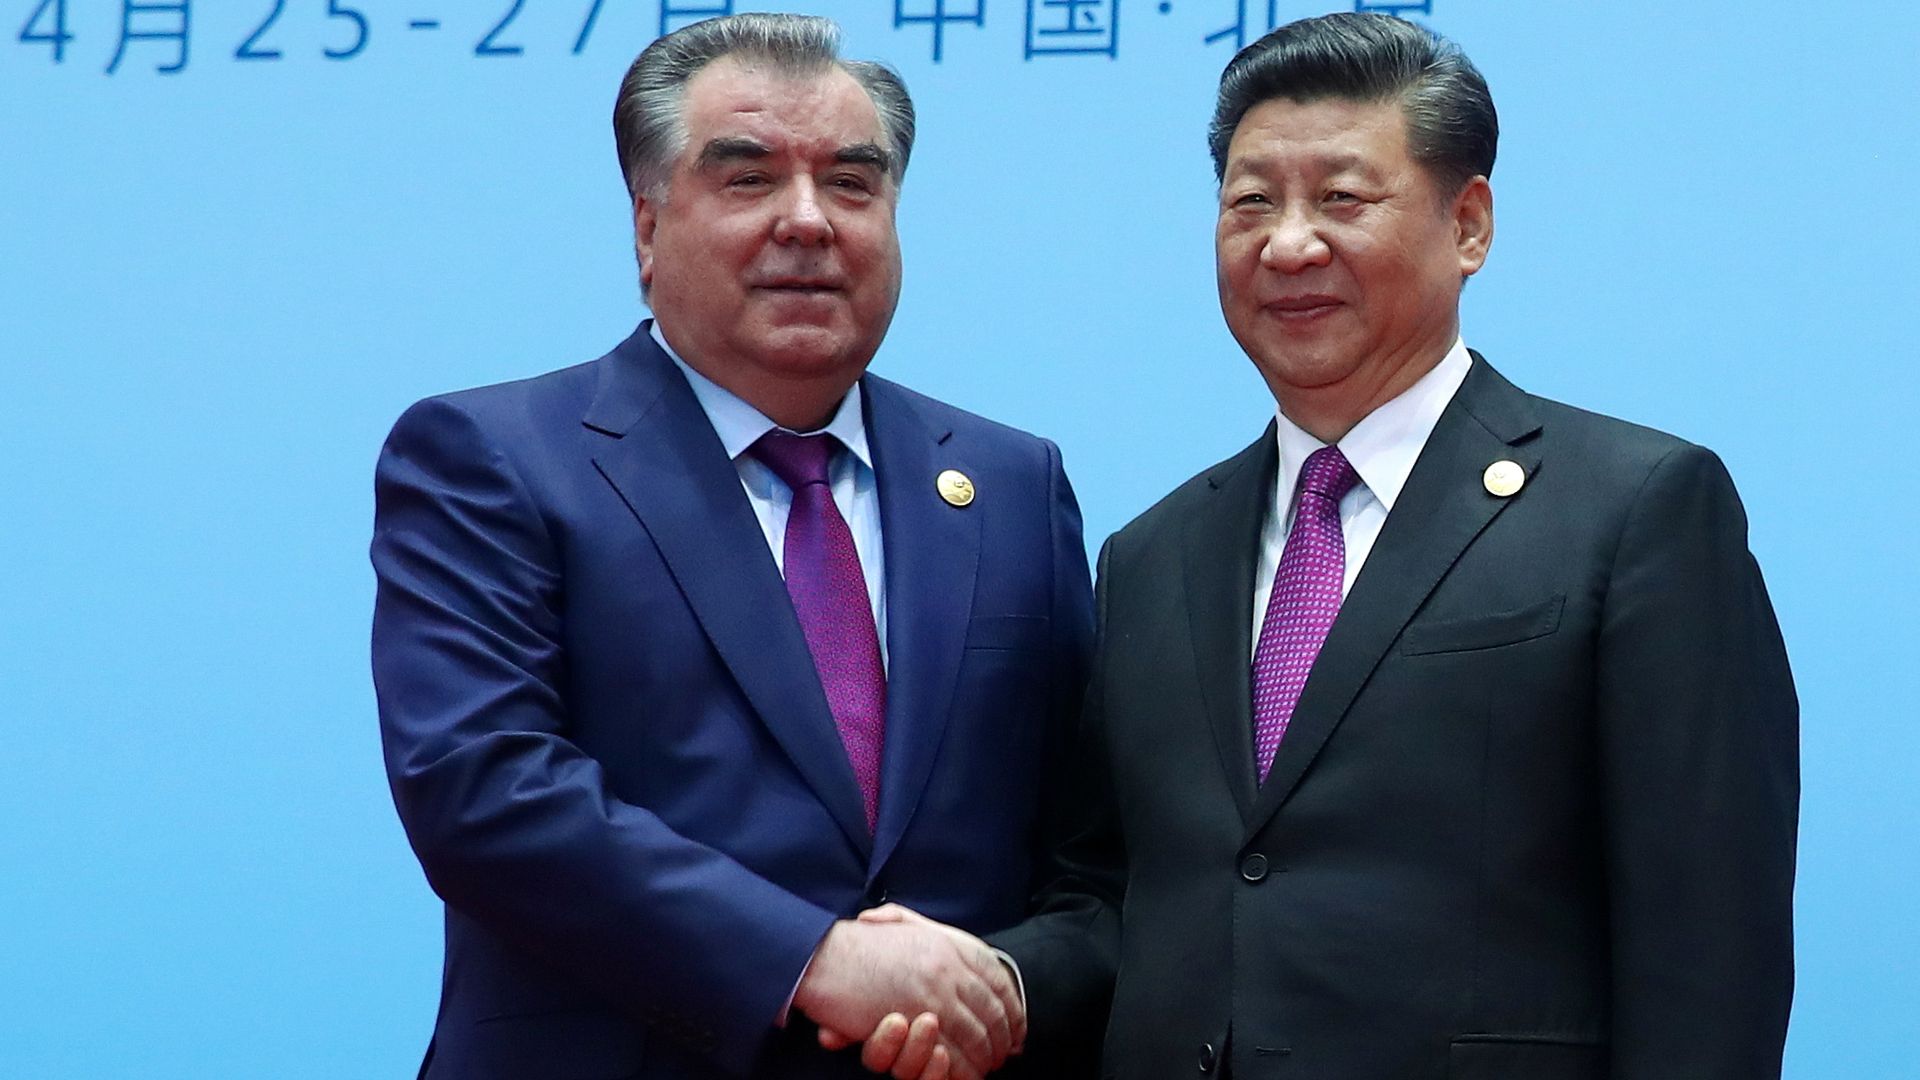 Xi Jinping and Emomali Rahmon shaking hands